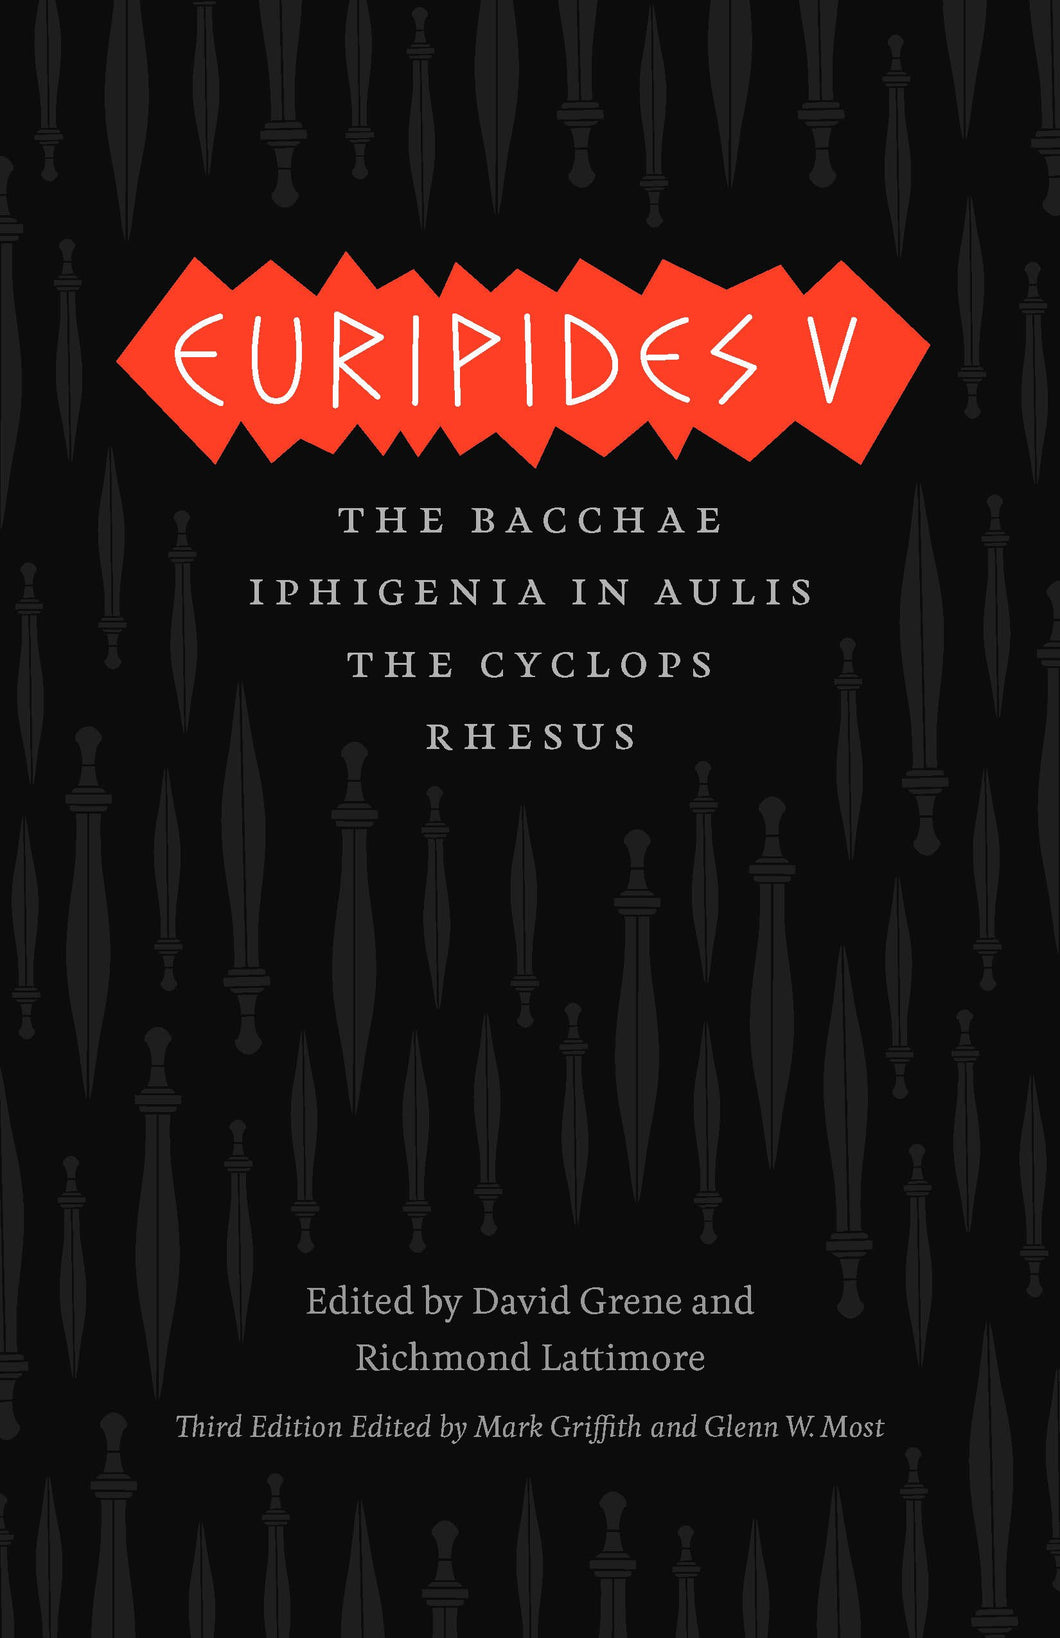 Euripides V (Iphigenia in Aulis) - Supplemental